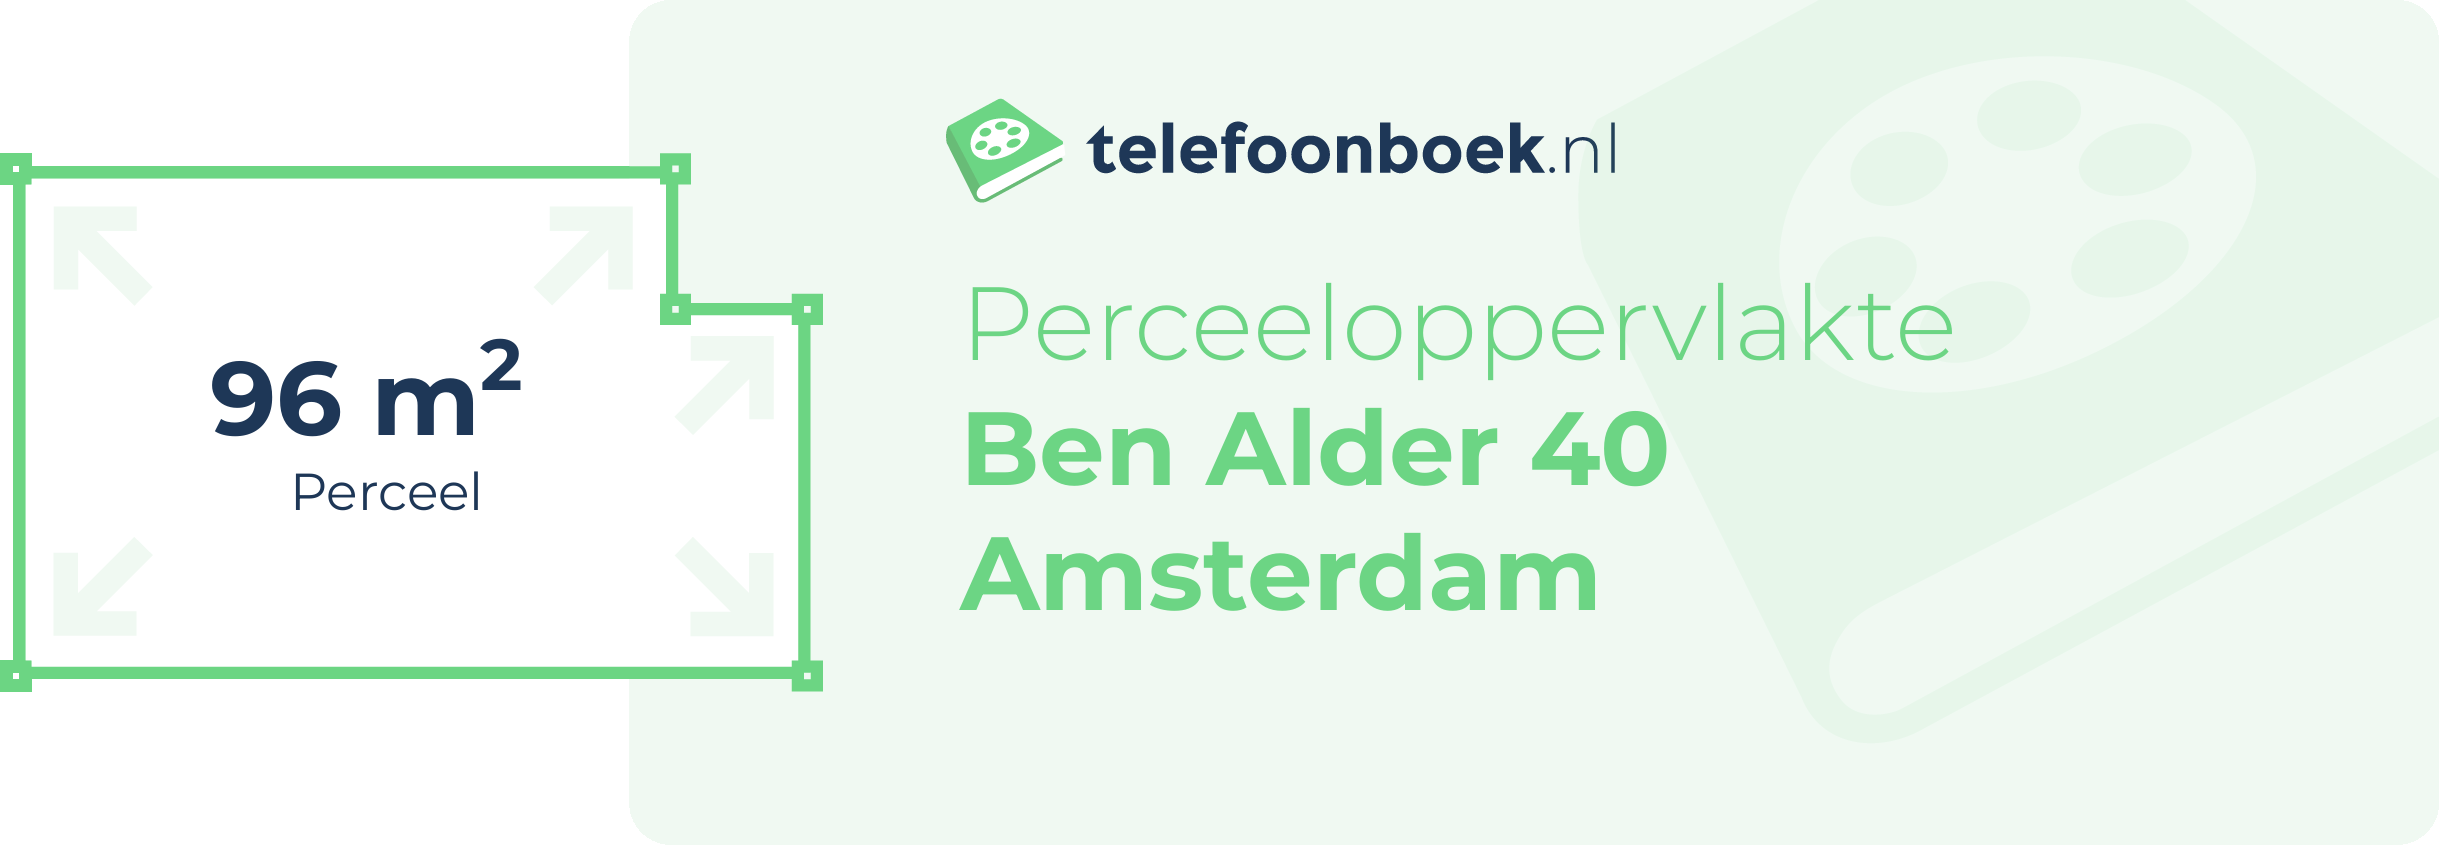 Perceeloppervlakte Ben Alder 40 Amsterdam